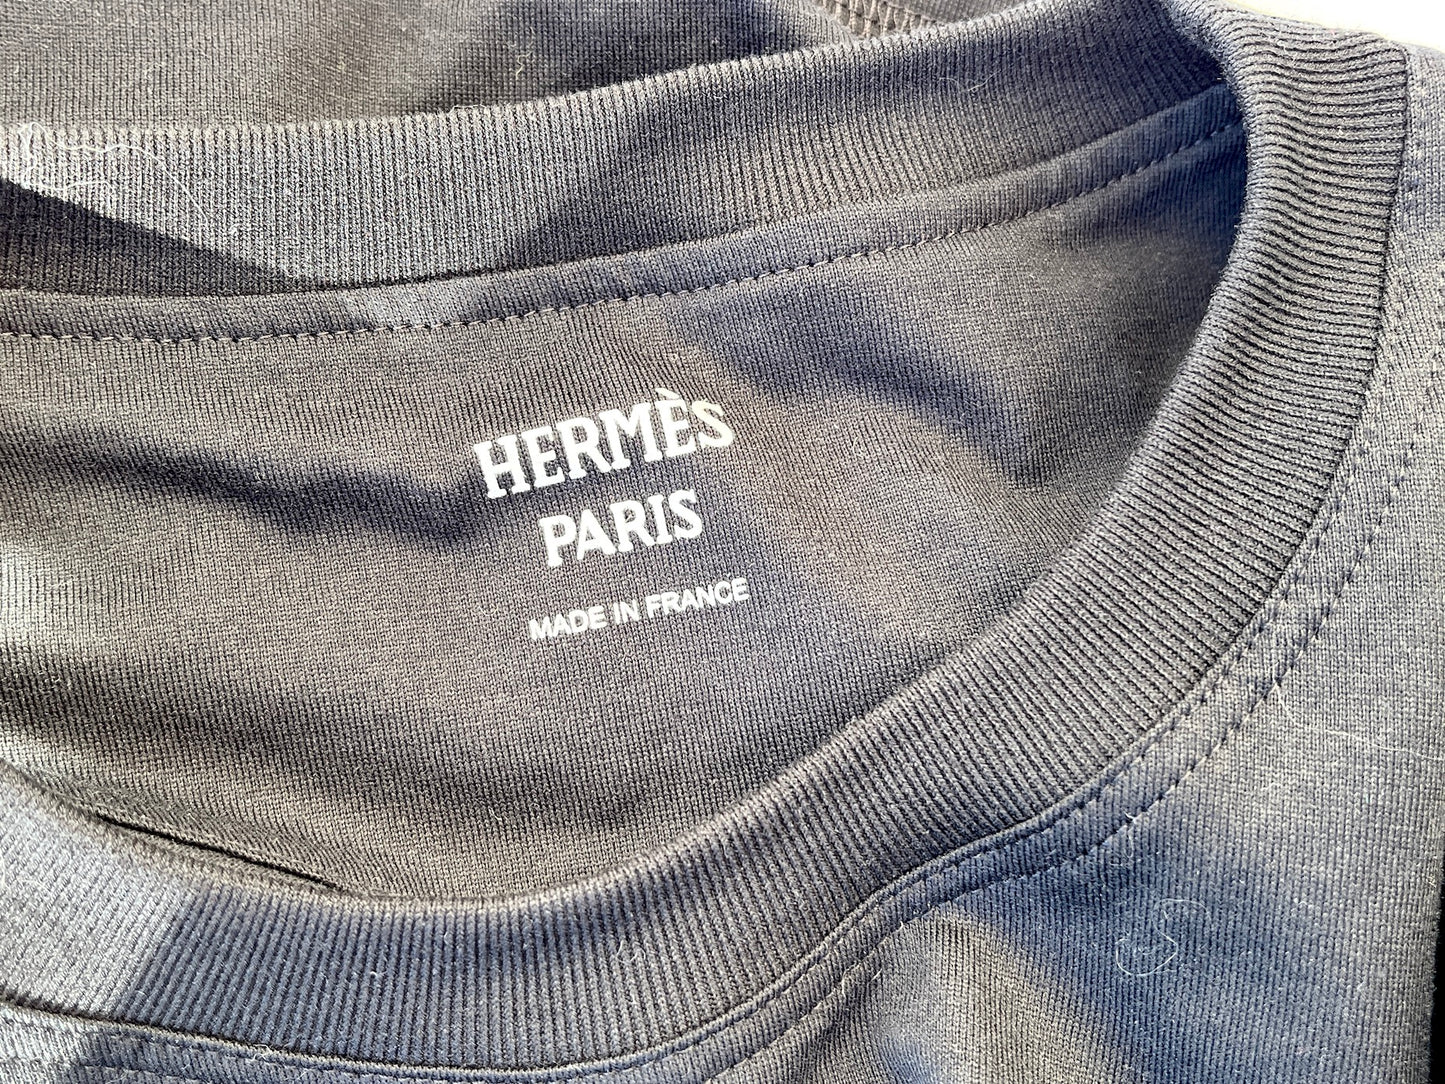 New Hermes Embroidered Pocket Black Cotton T shirt 38 6